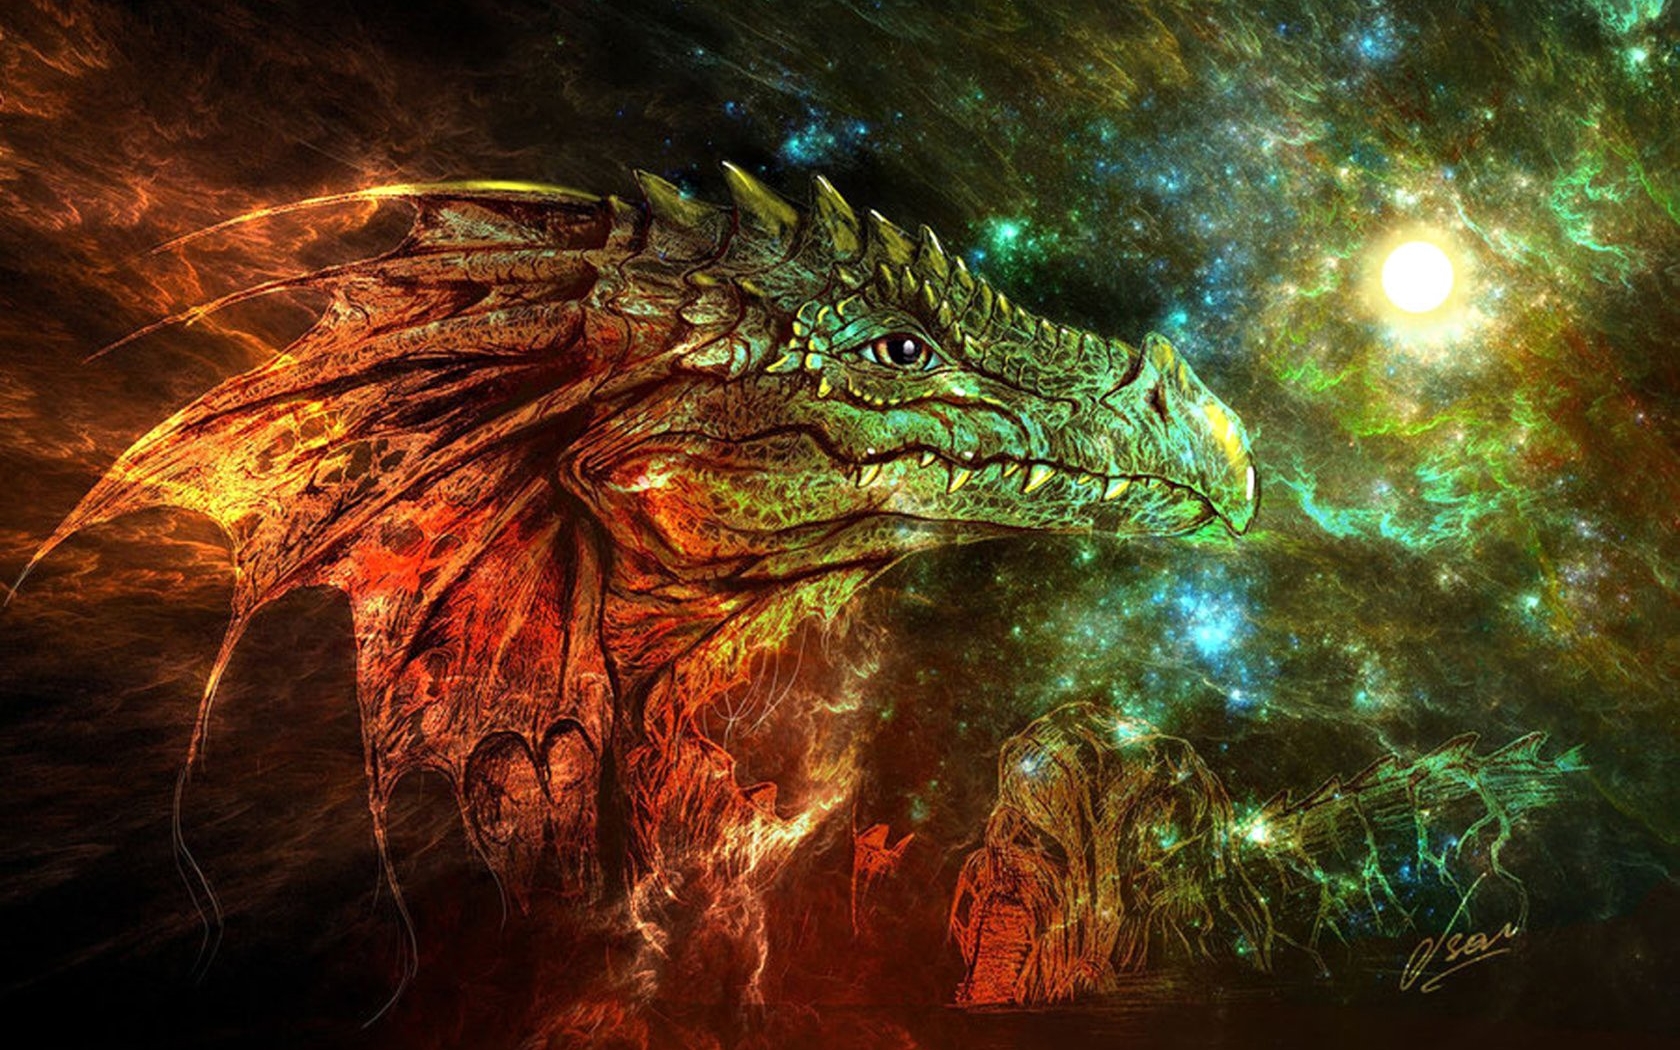 Cosmic Dragon Wallpapers